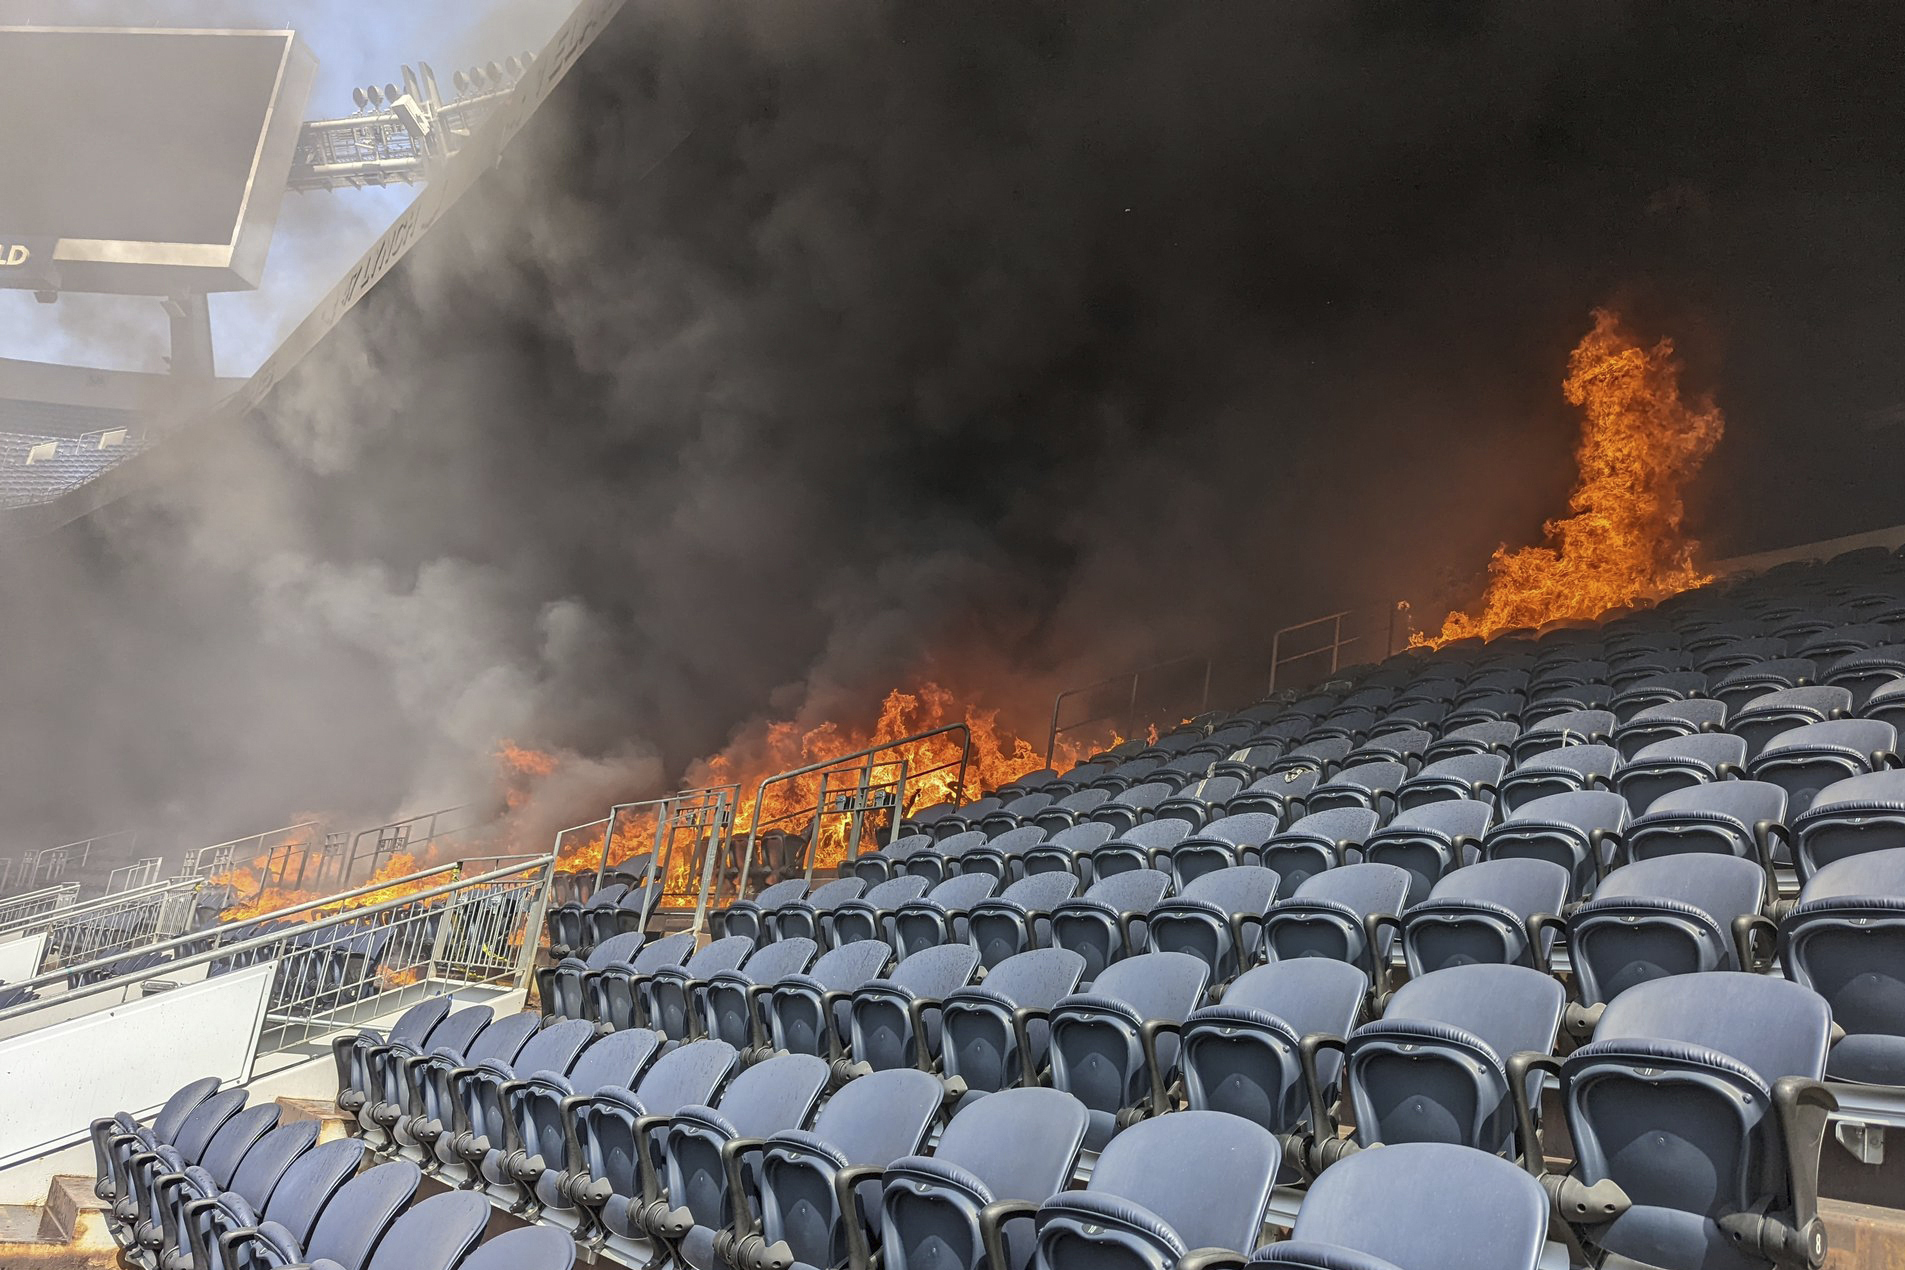 NFL stadium catches fire, plastic seats burn with 'ferocity' - mlive.com